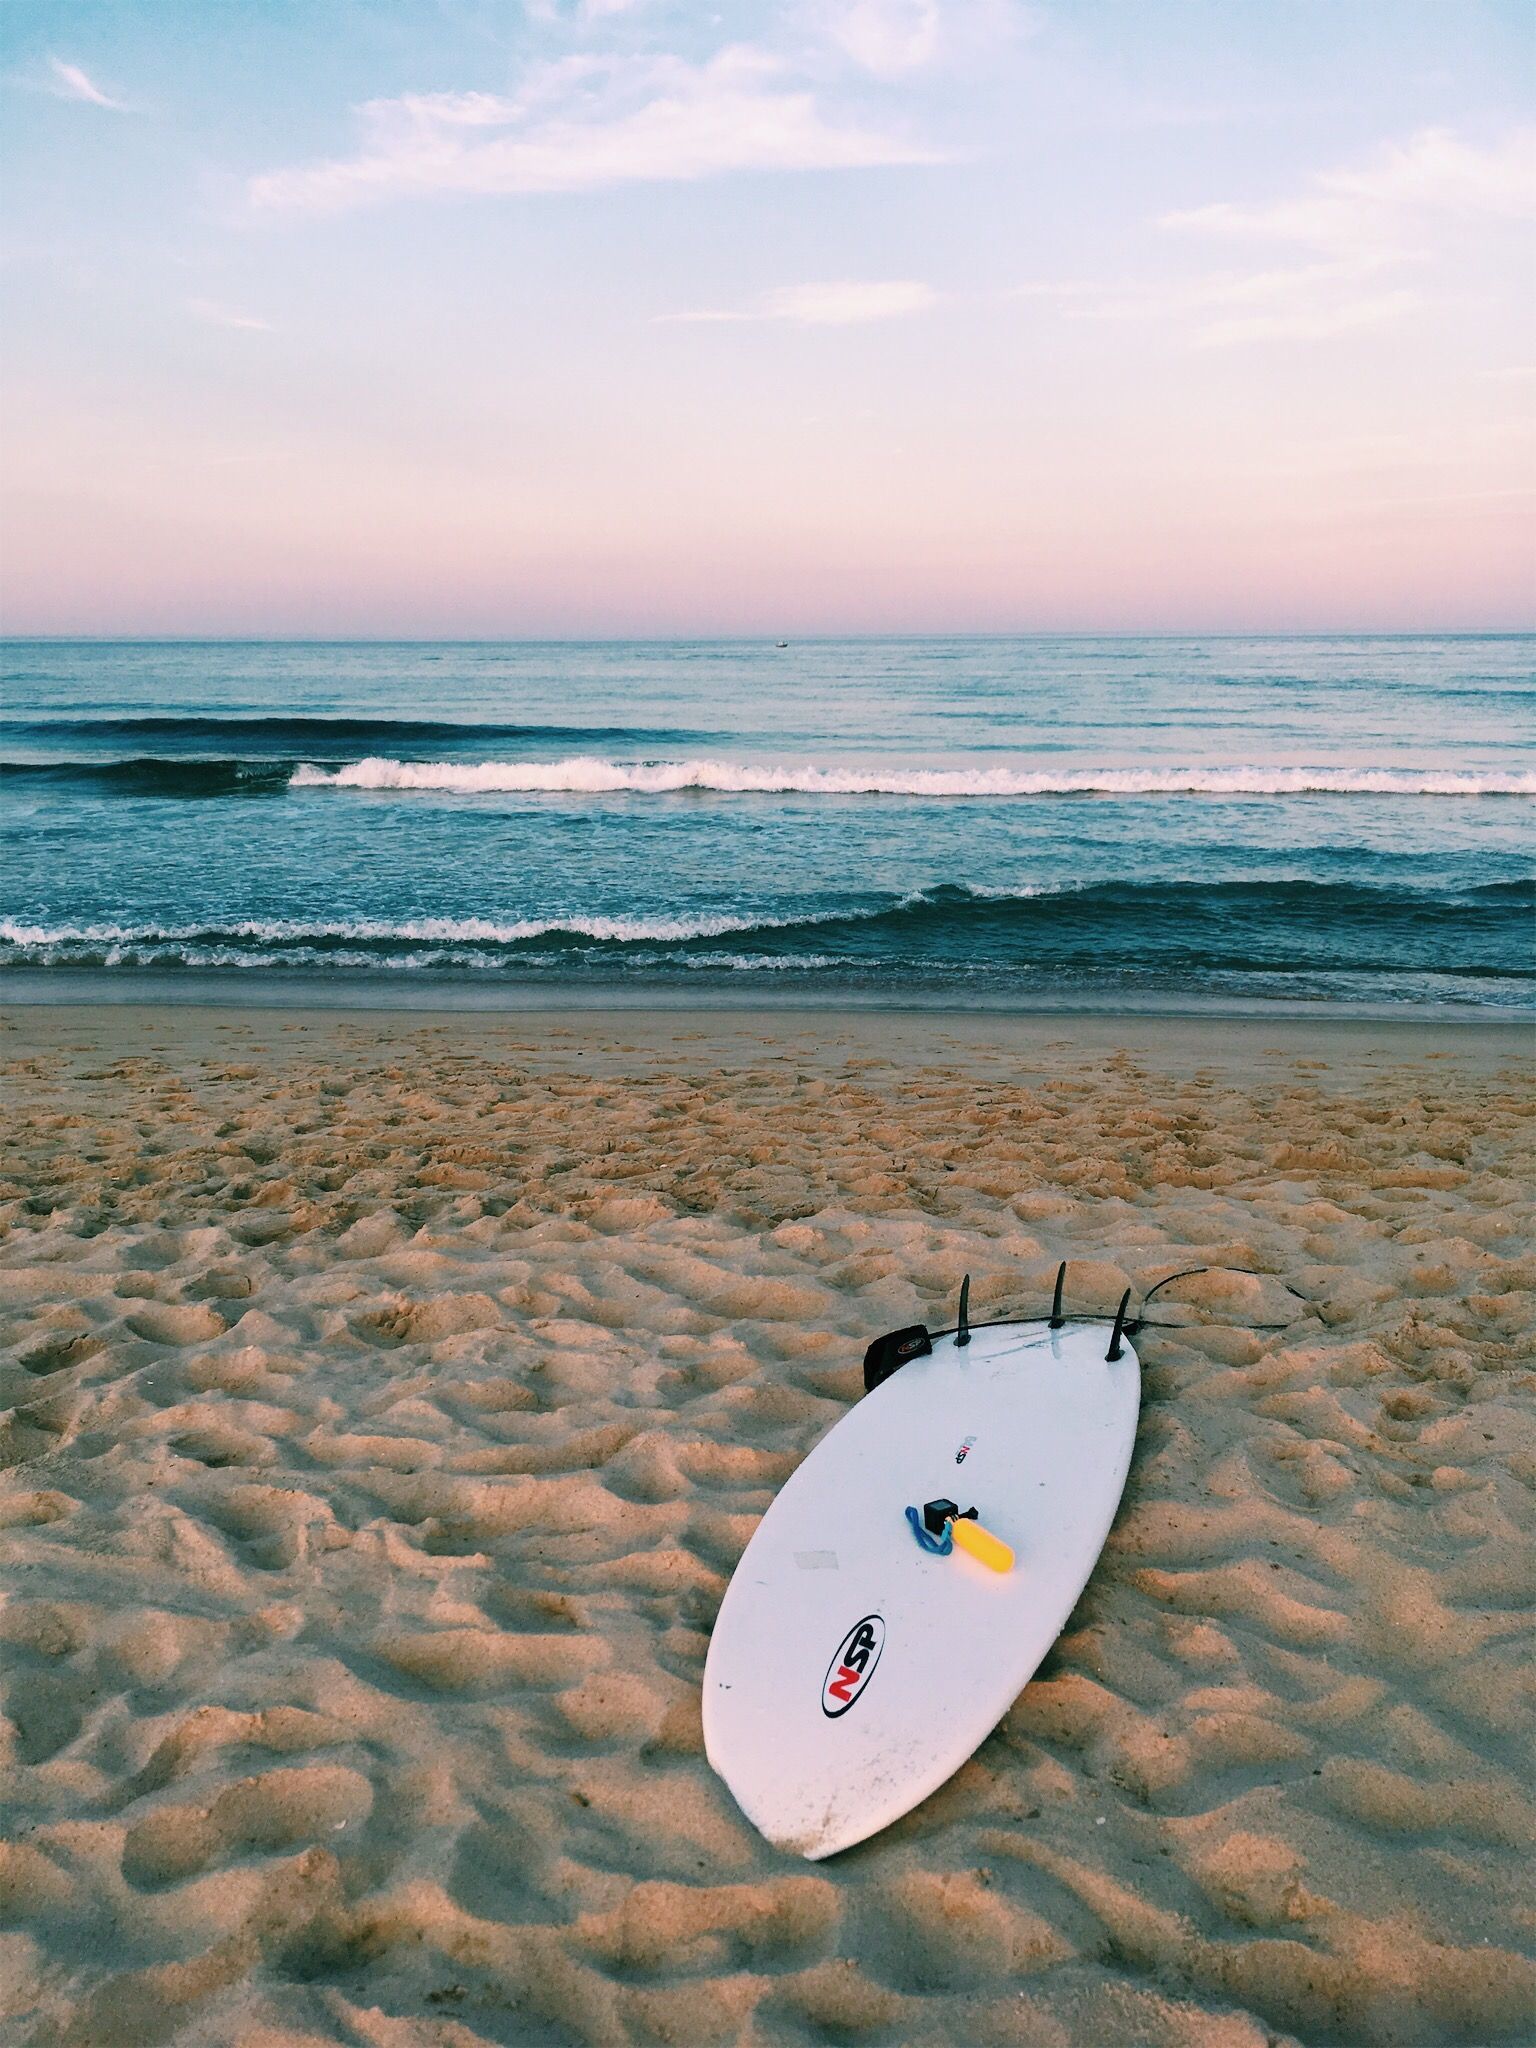  Surfen Hintergrundbild 1536x2048. lℯts surf. ♥